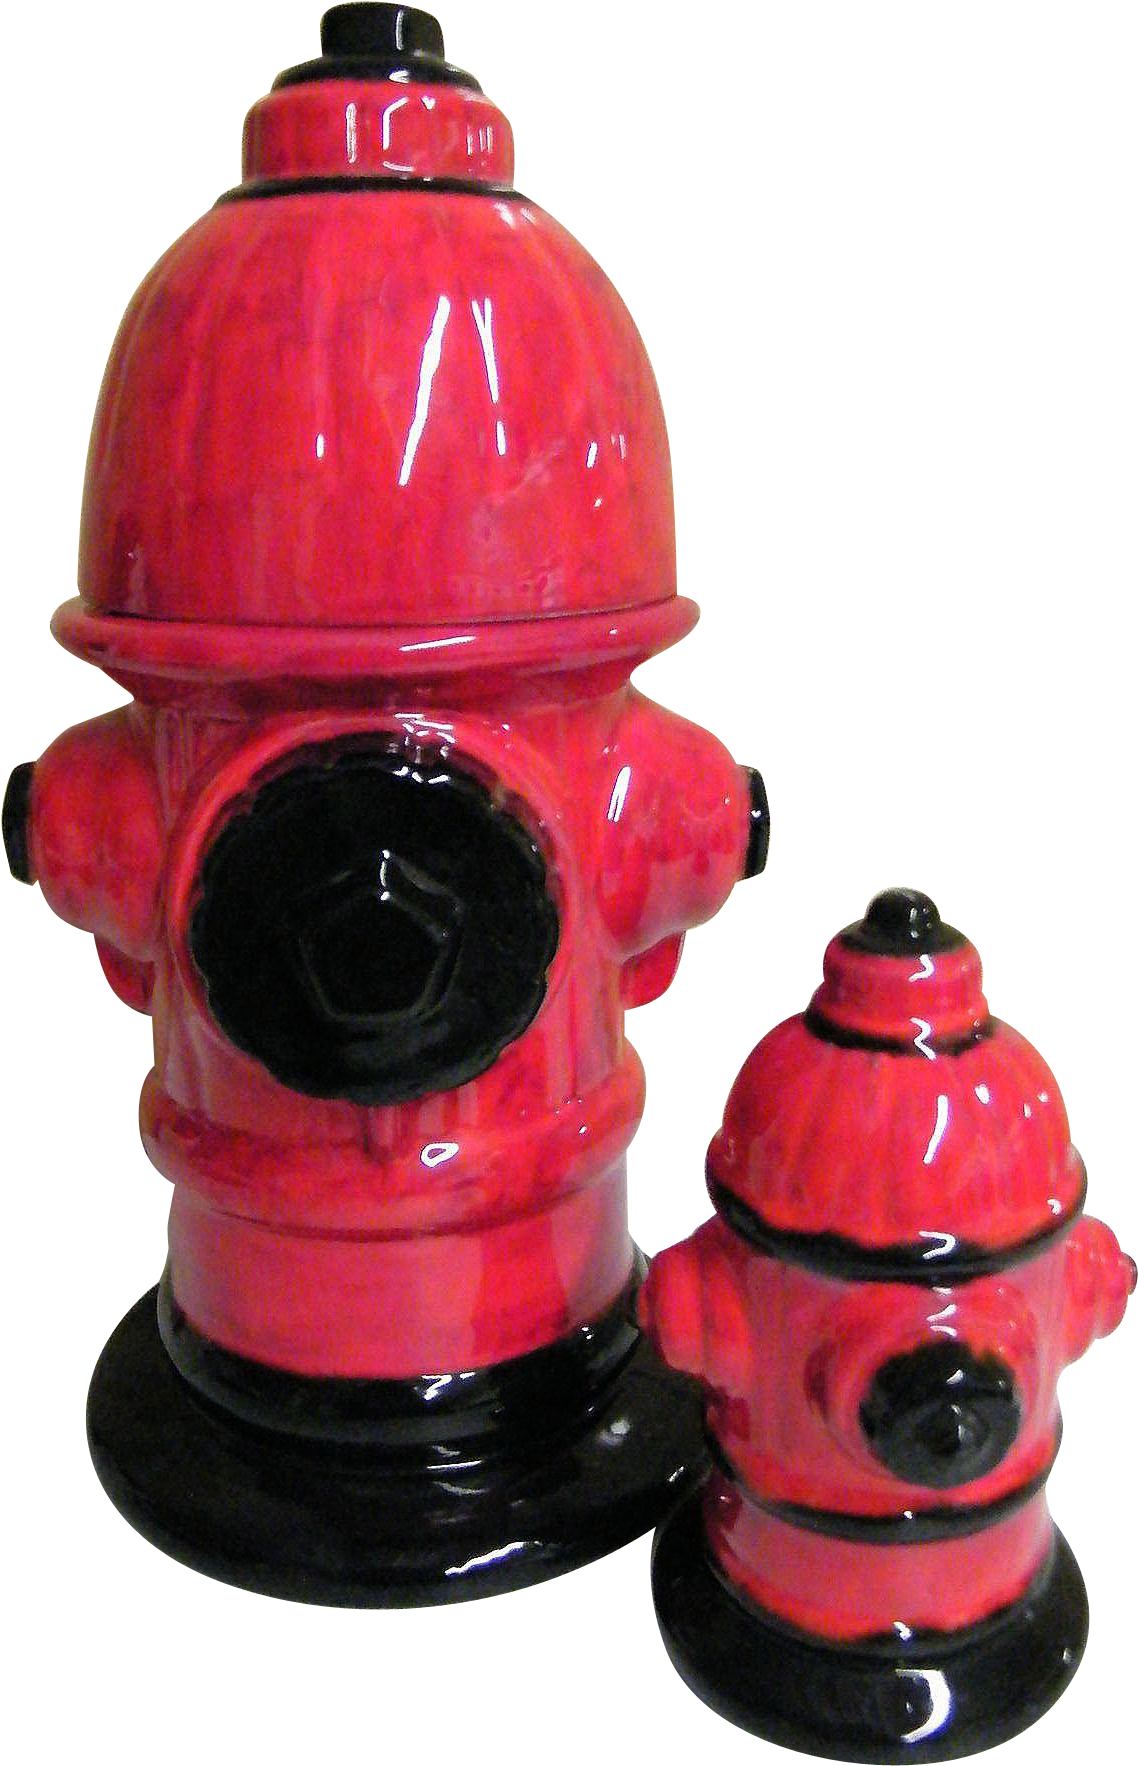 Fire Hydrant Cookie Jar Red Fire Hydrant Cookie Jar - Ceramic (1765x1765)